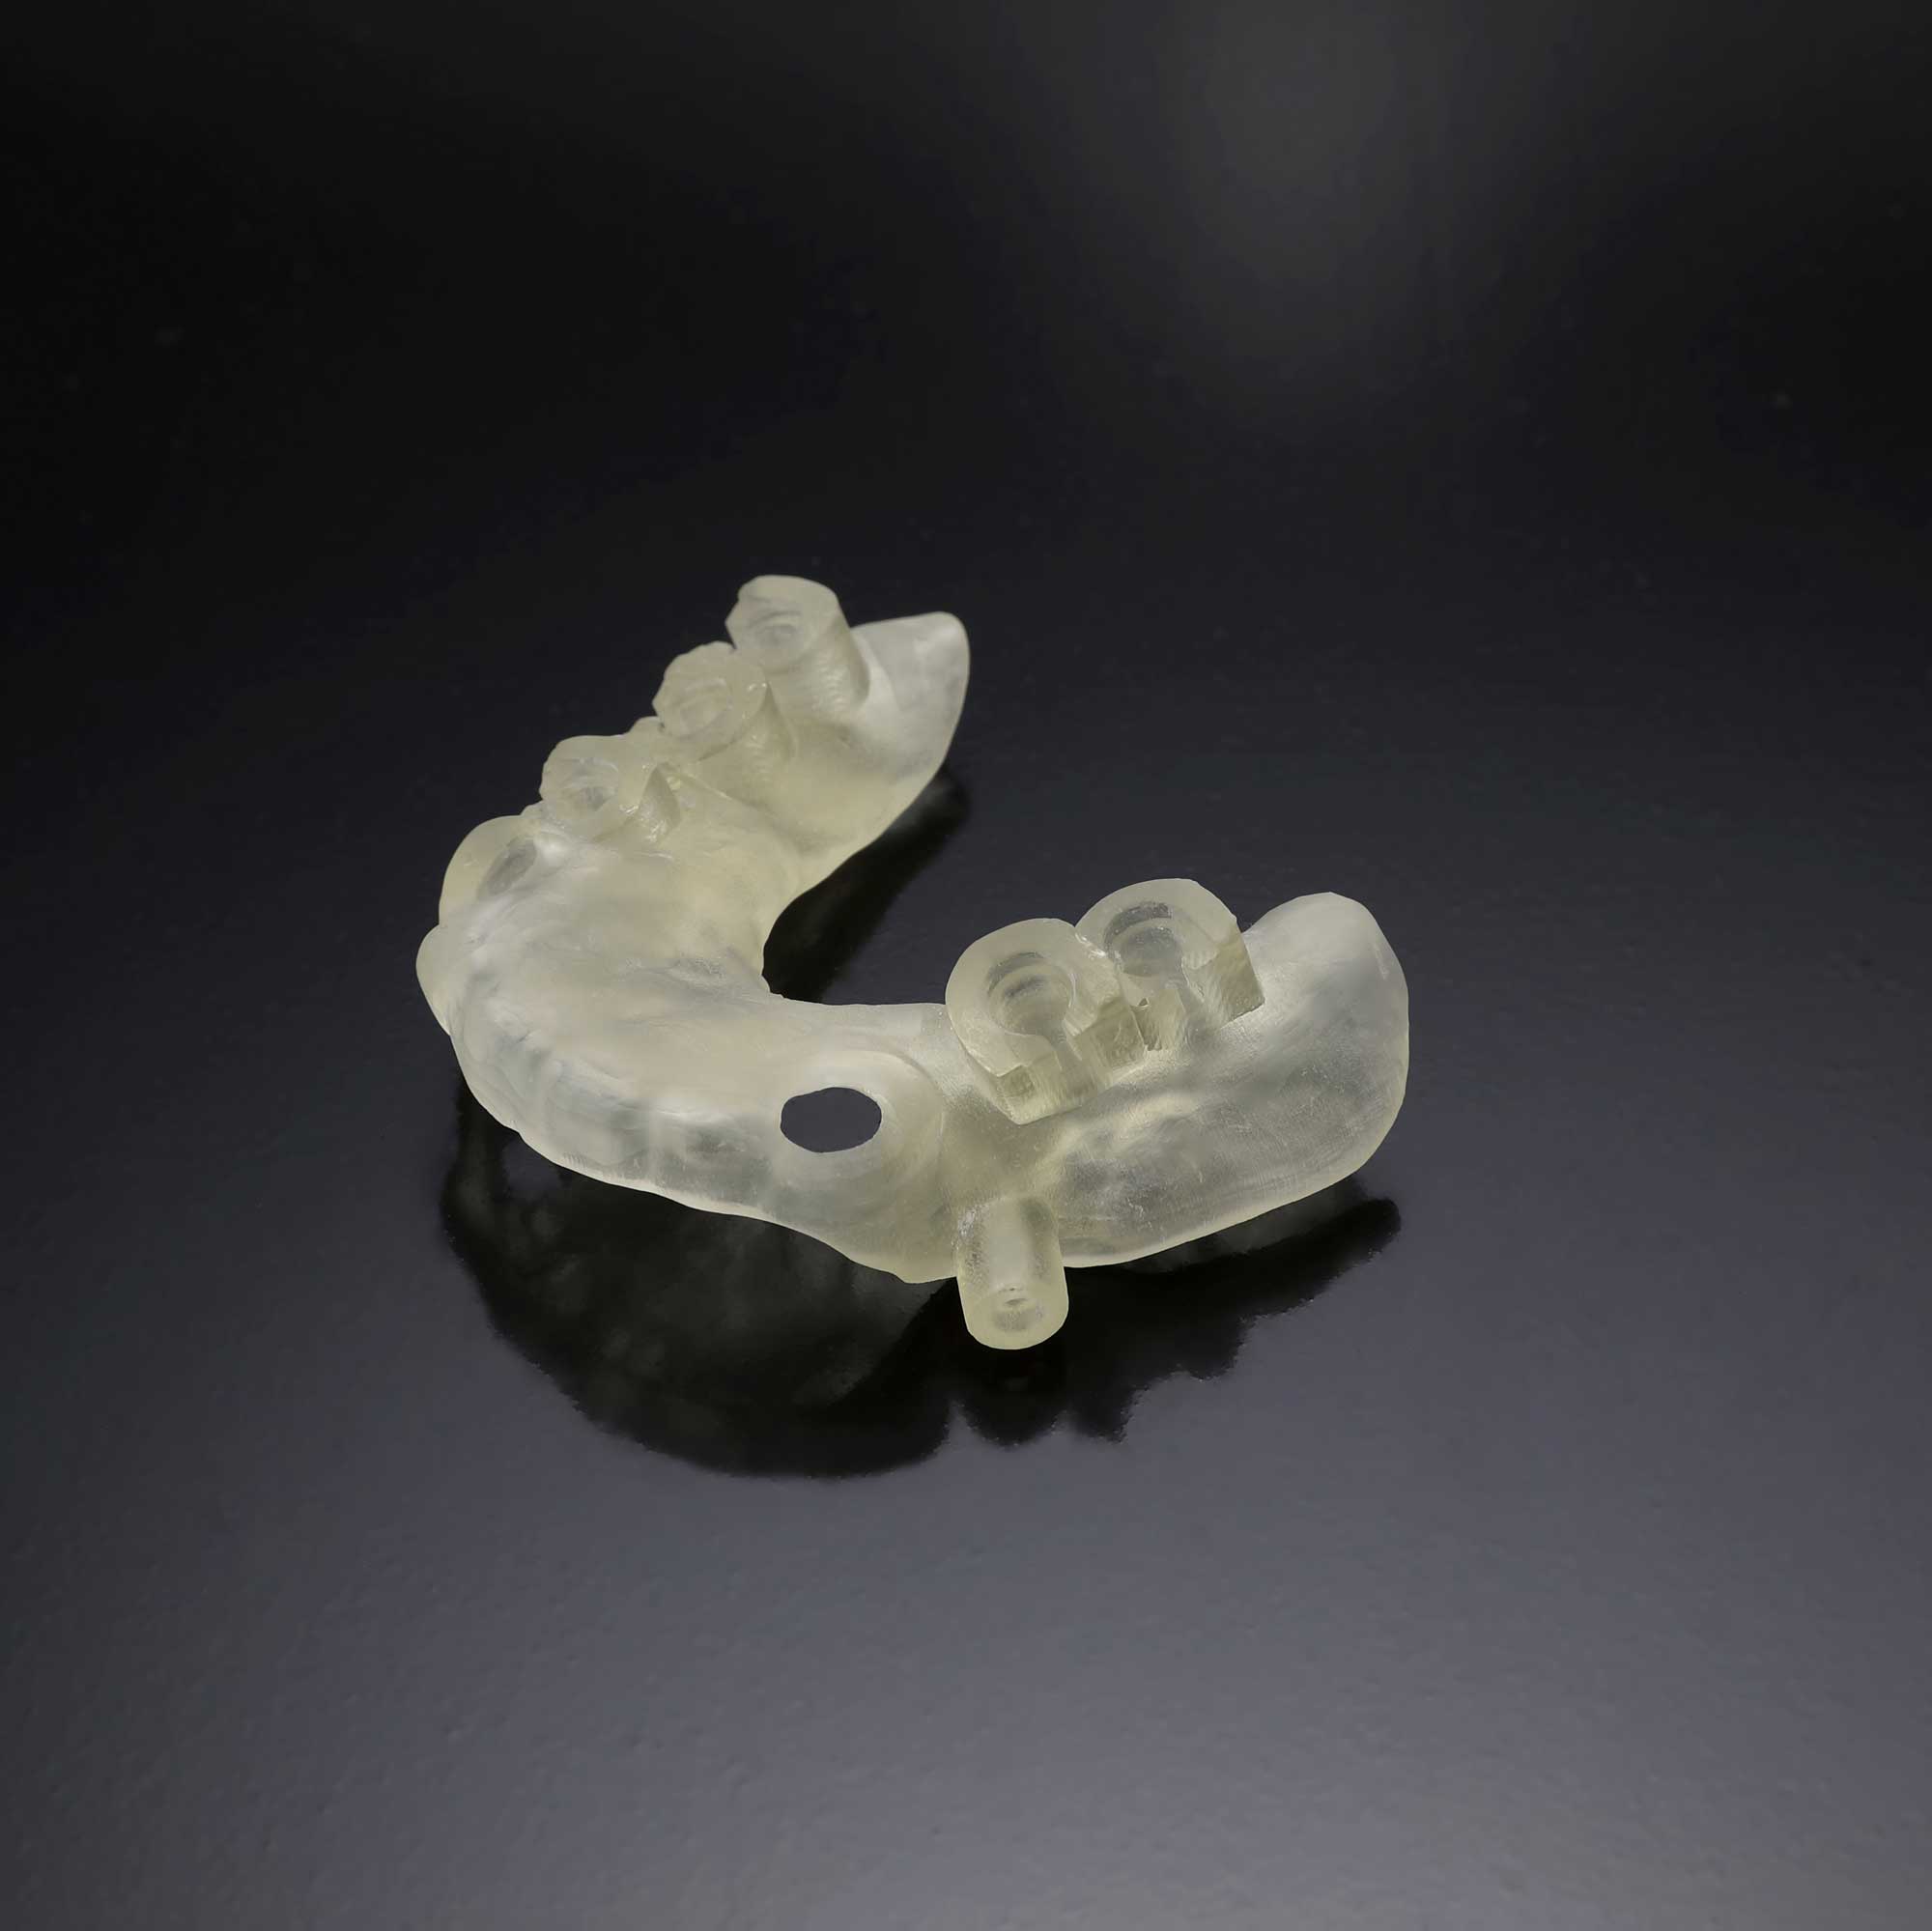 Stomatologiczny szablon chirurgiczny wydrukowany na drukarce 3D